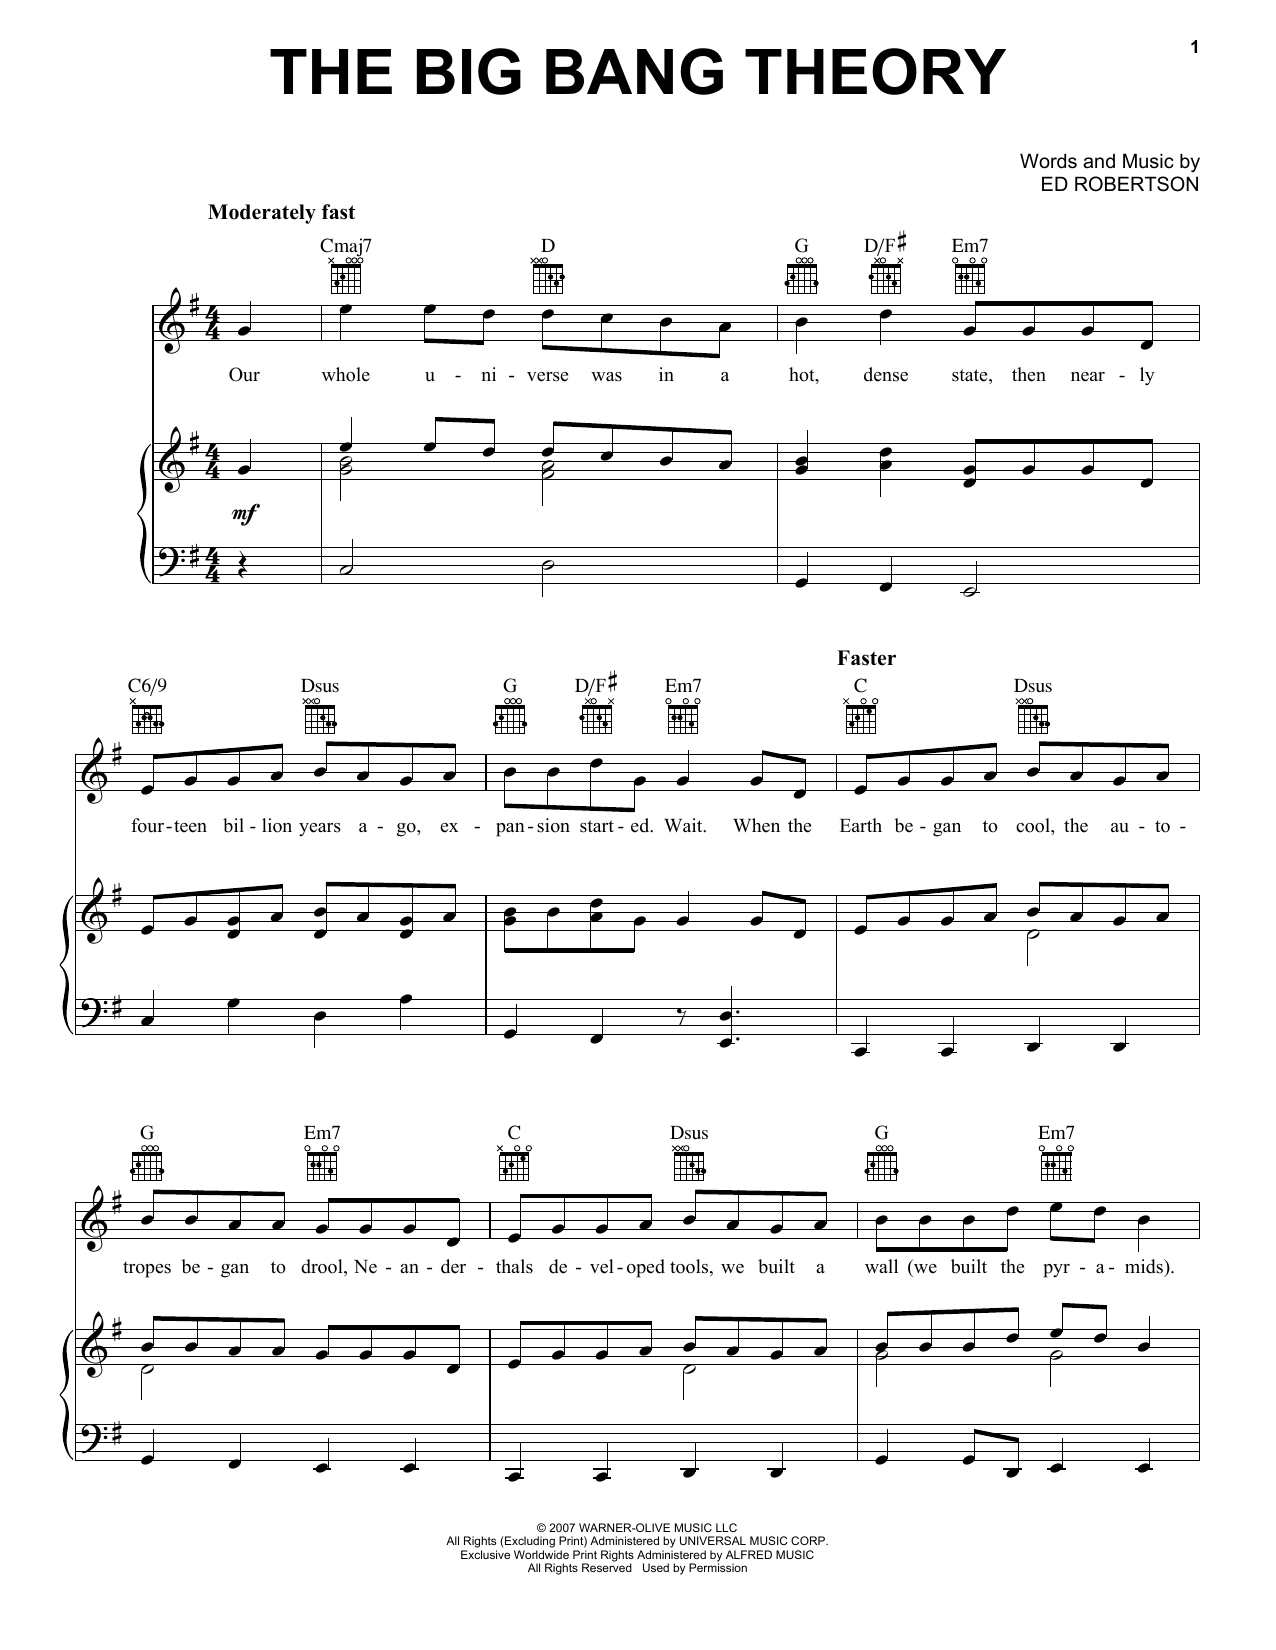 Barenaked Ladies The Big Bang Theory Sheet Music Notes & Chords for Piano, Vocal & Guitar Chords (Right-Hand Melody) - Download or Print PDF